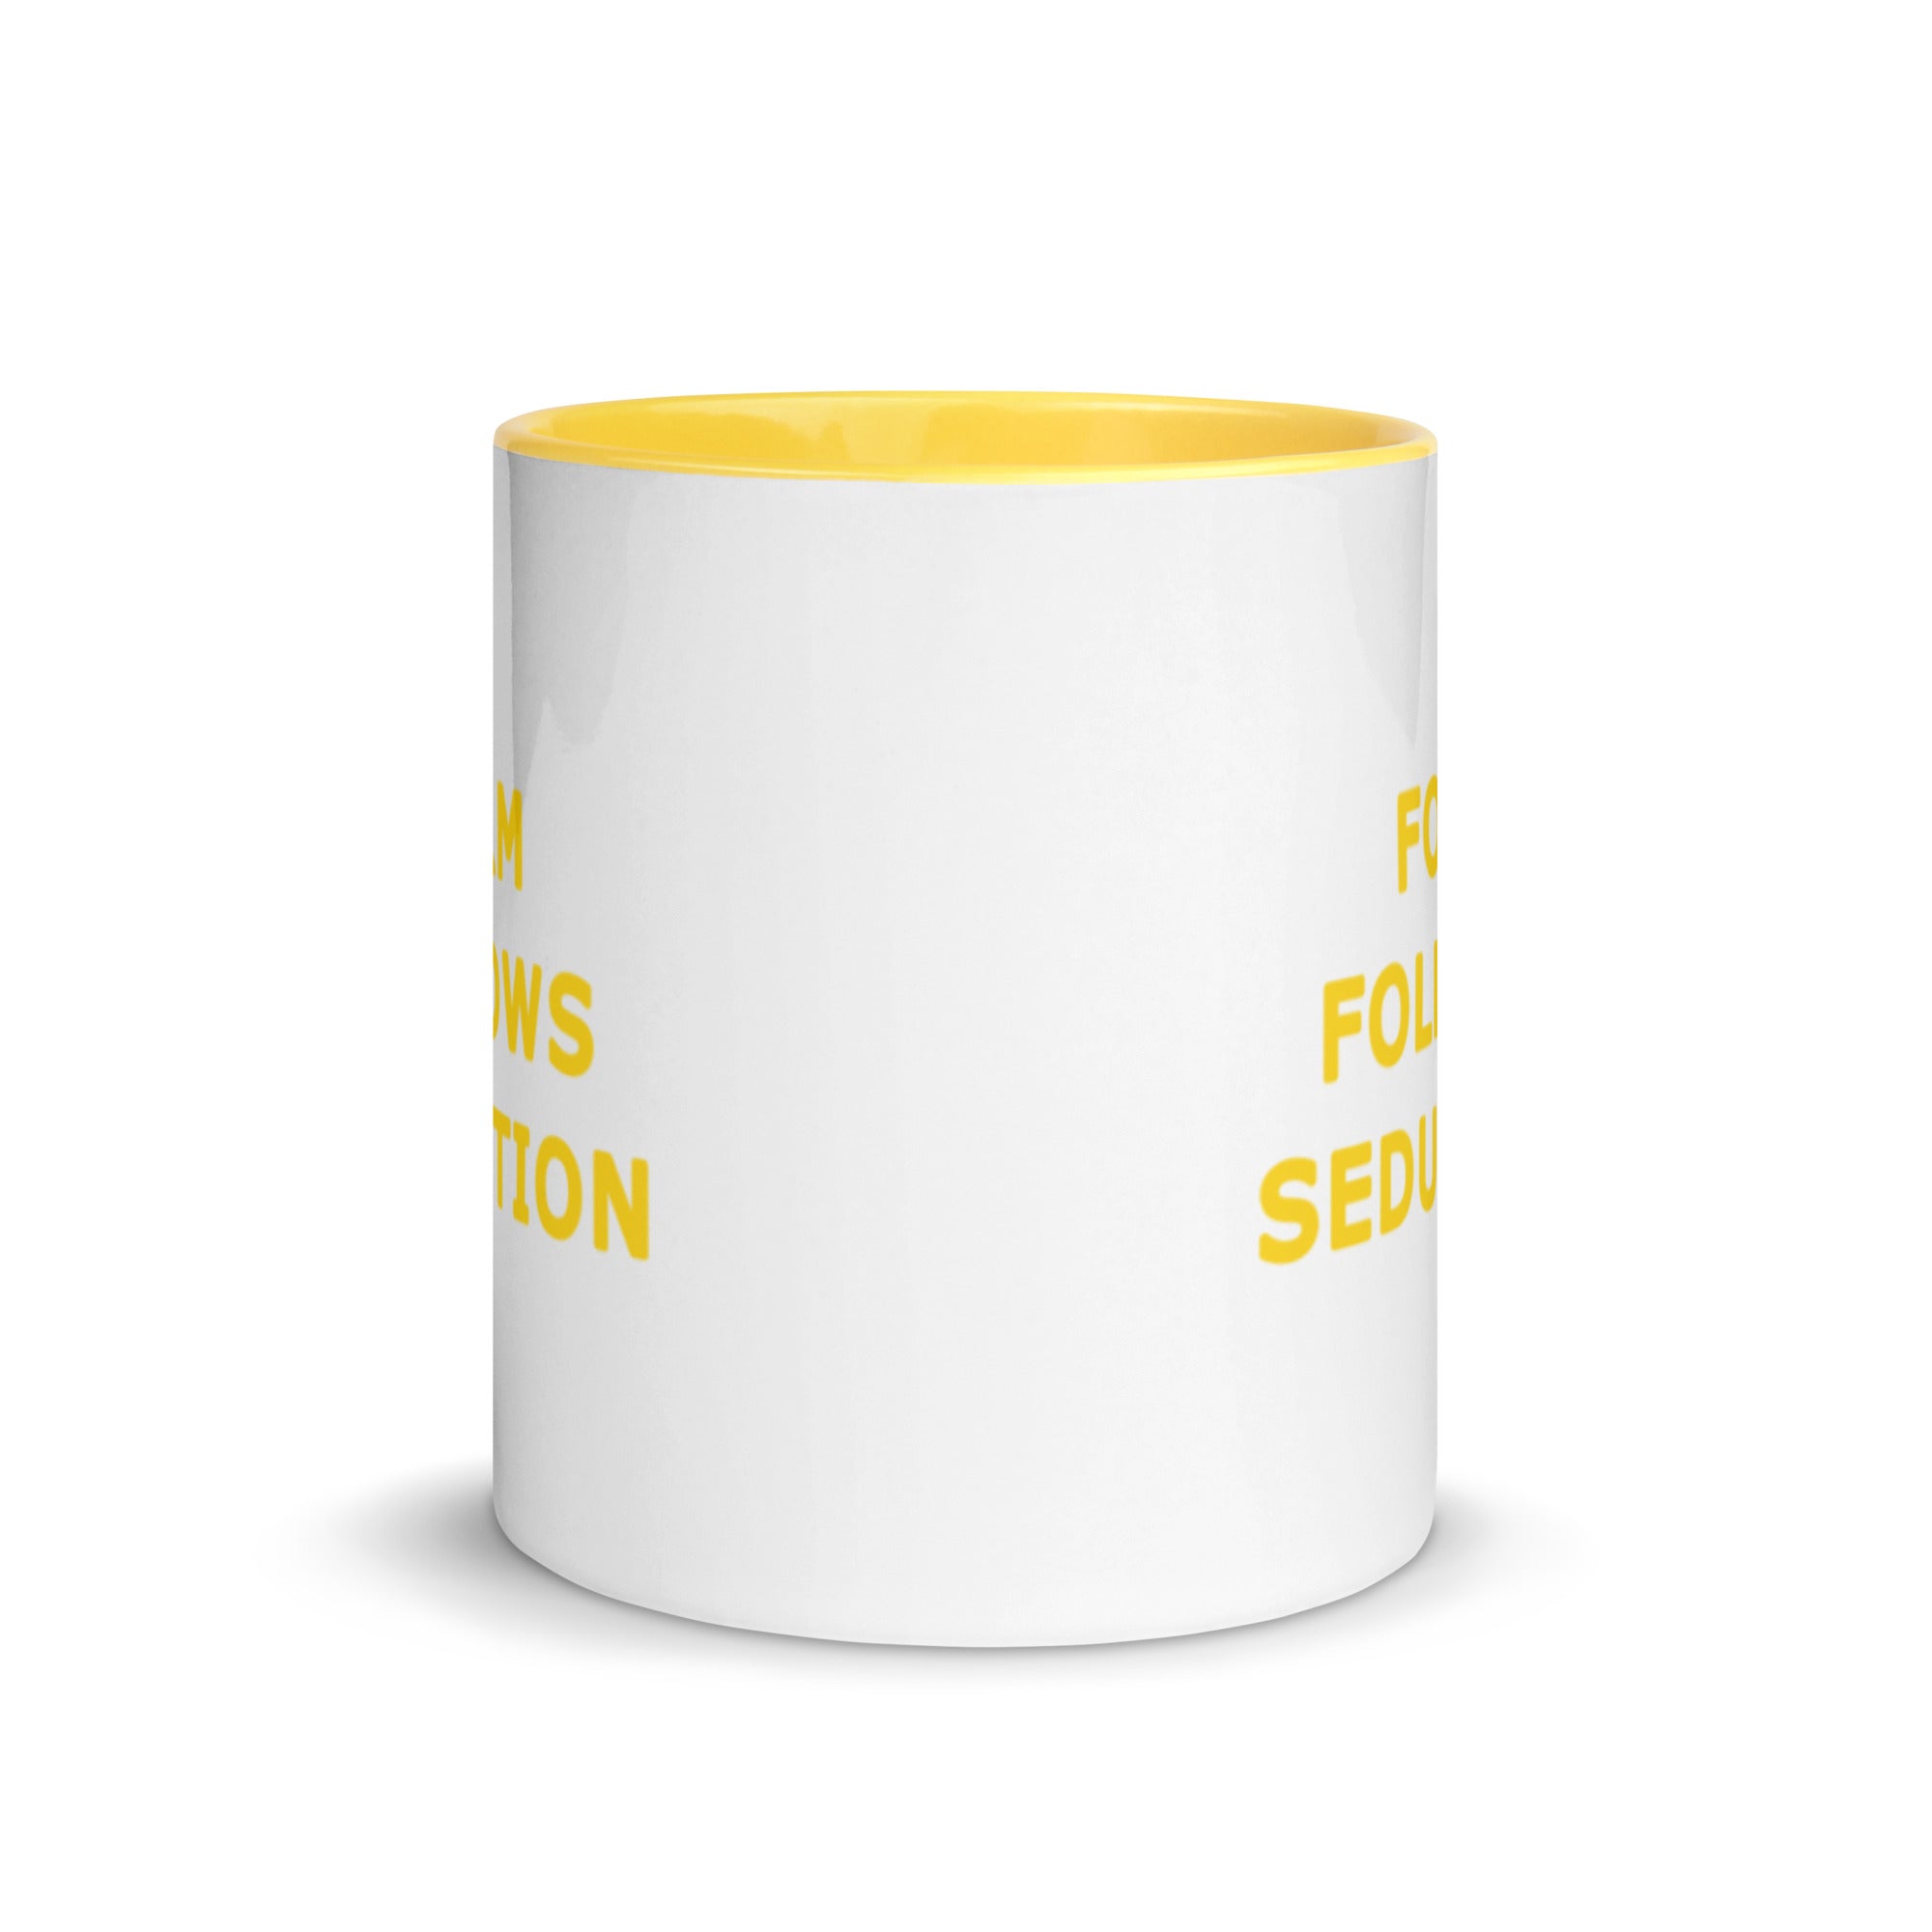 Form Follows Seduction Blue, Orange, Pink, Black or Yellow Mug